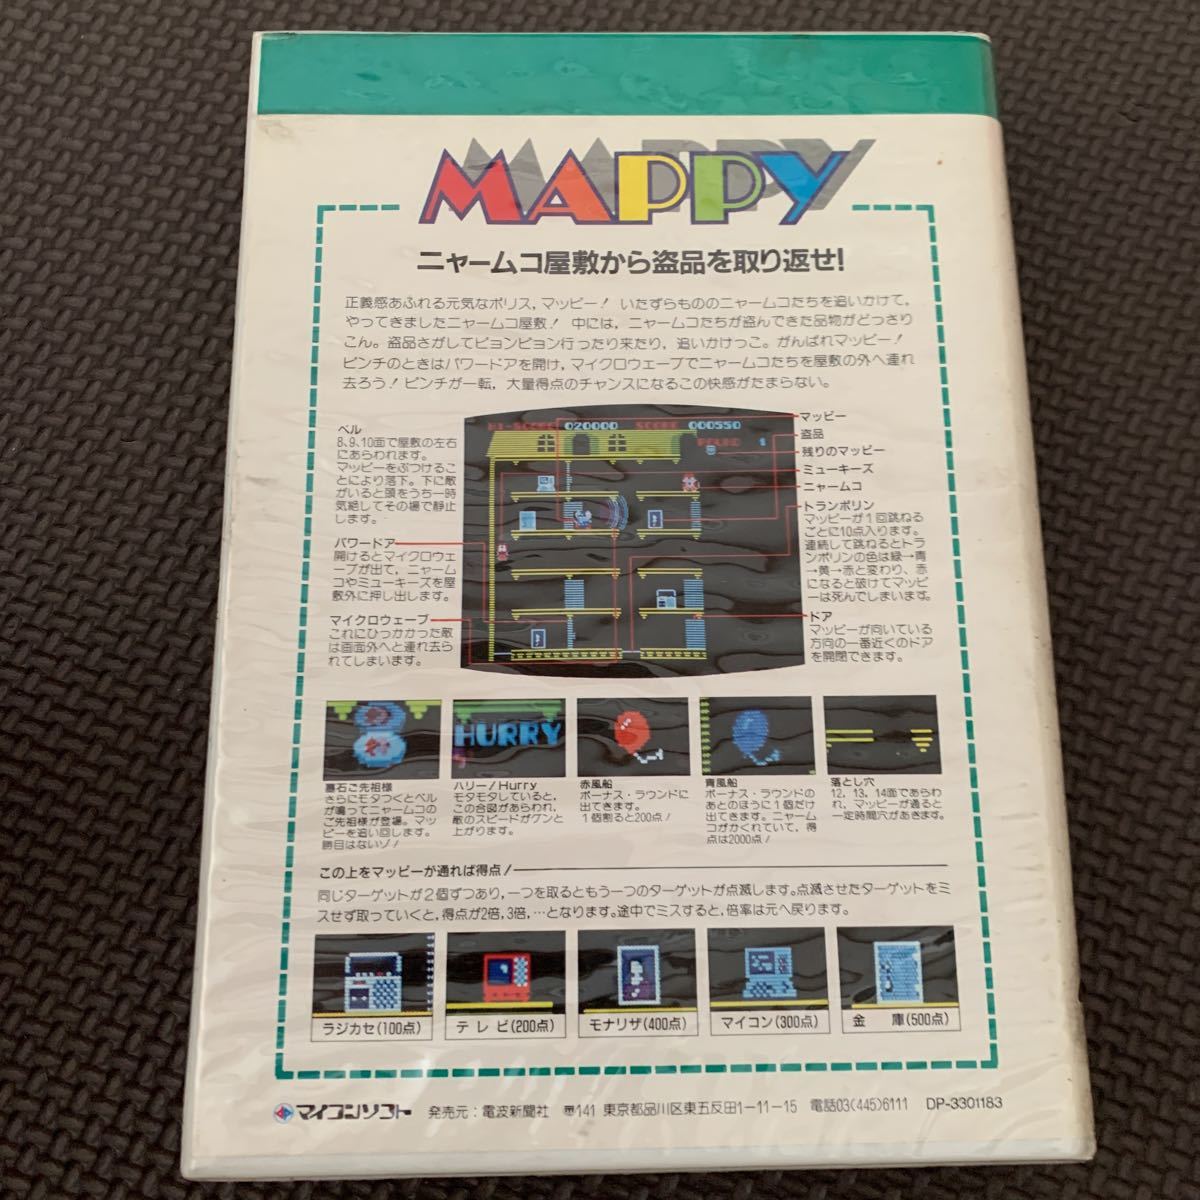 SHARP X1 マッピー MAPPY【マイコンソフト】【電波新聞社】【ナムコ】【namco】_画像2